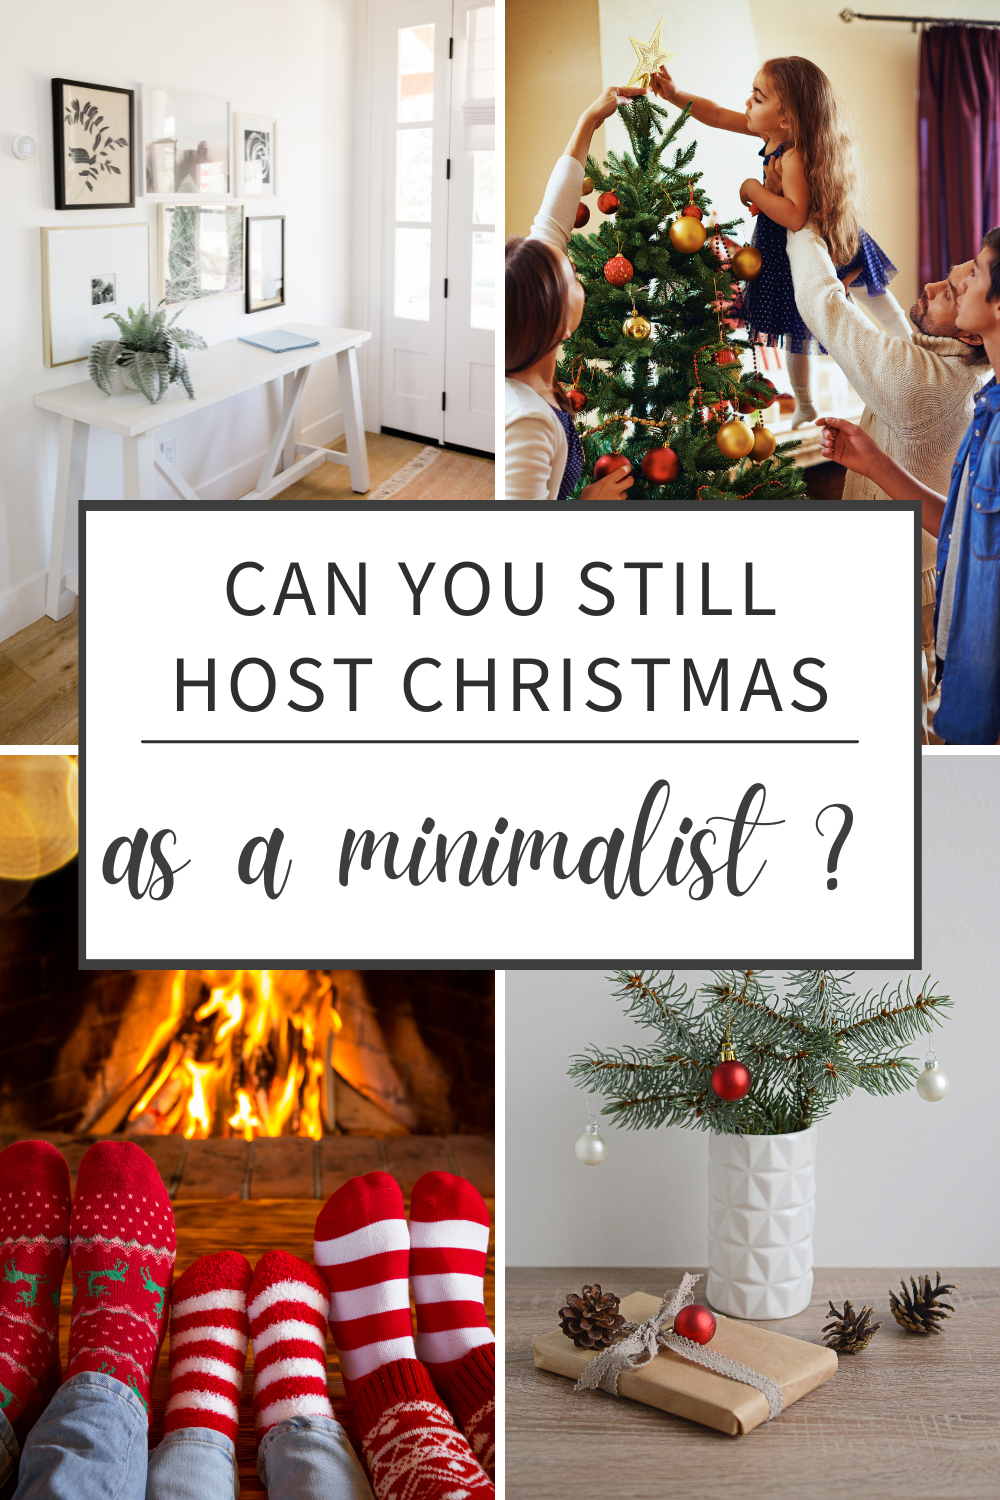 Can you still host Christmas as a minimalist?